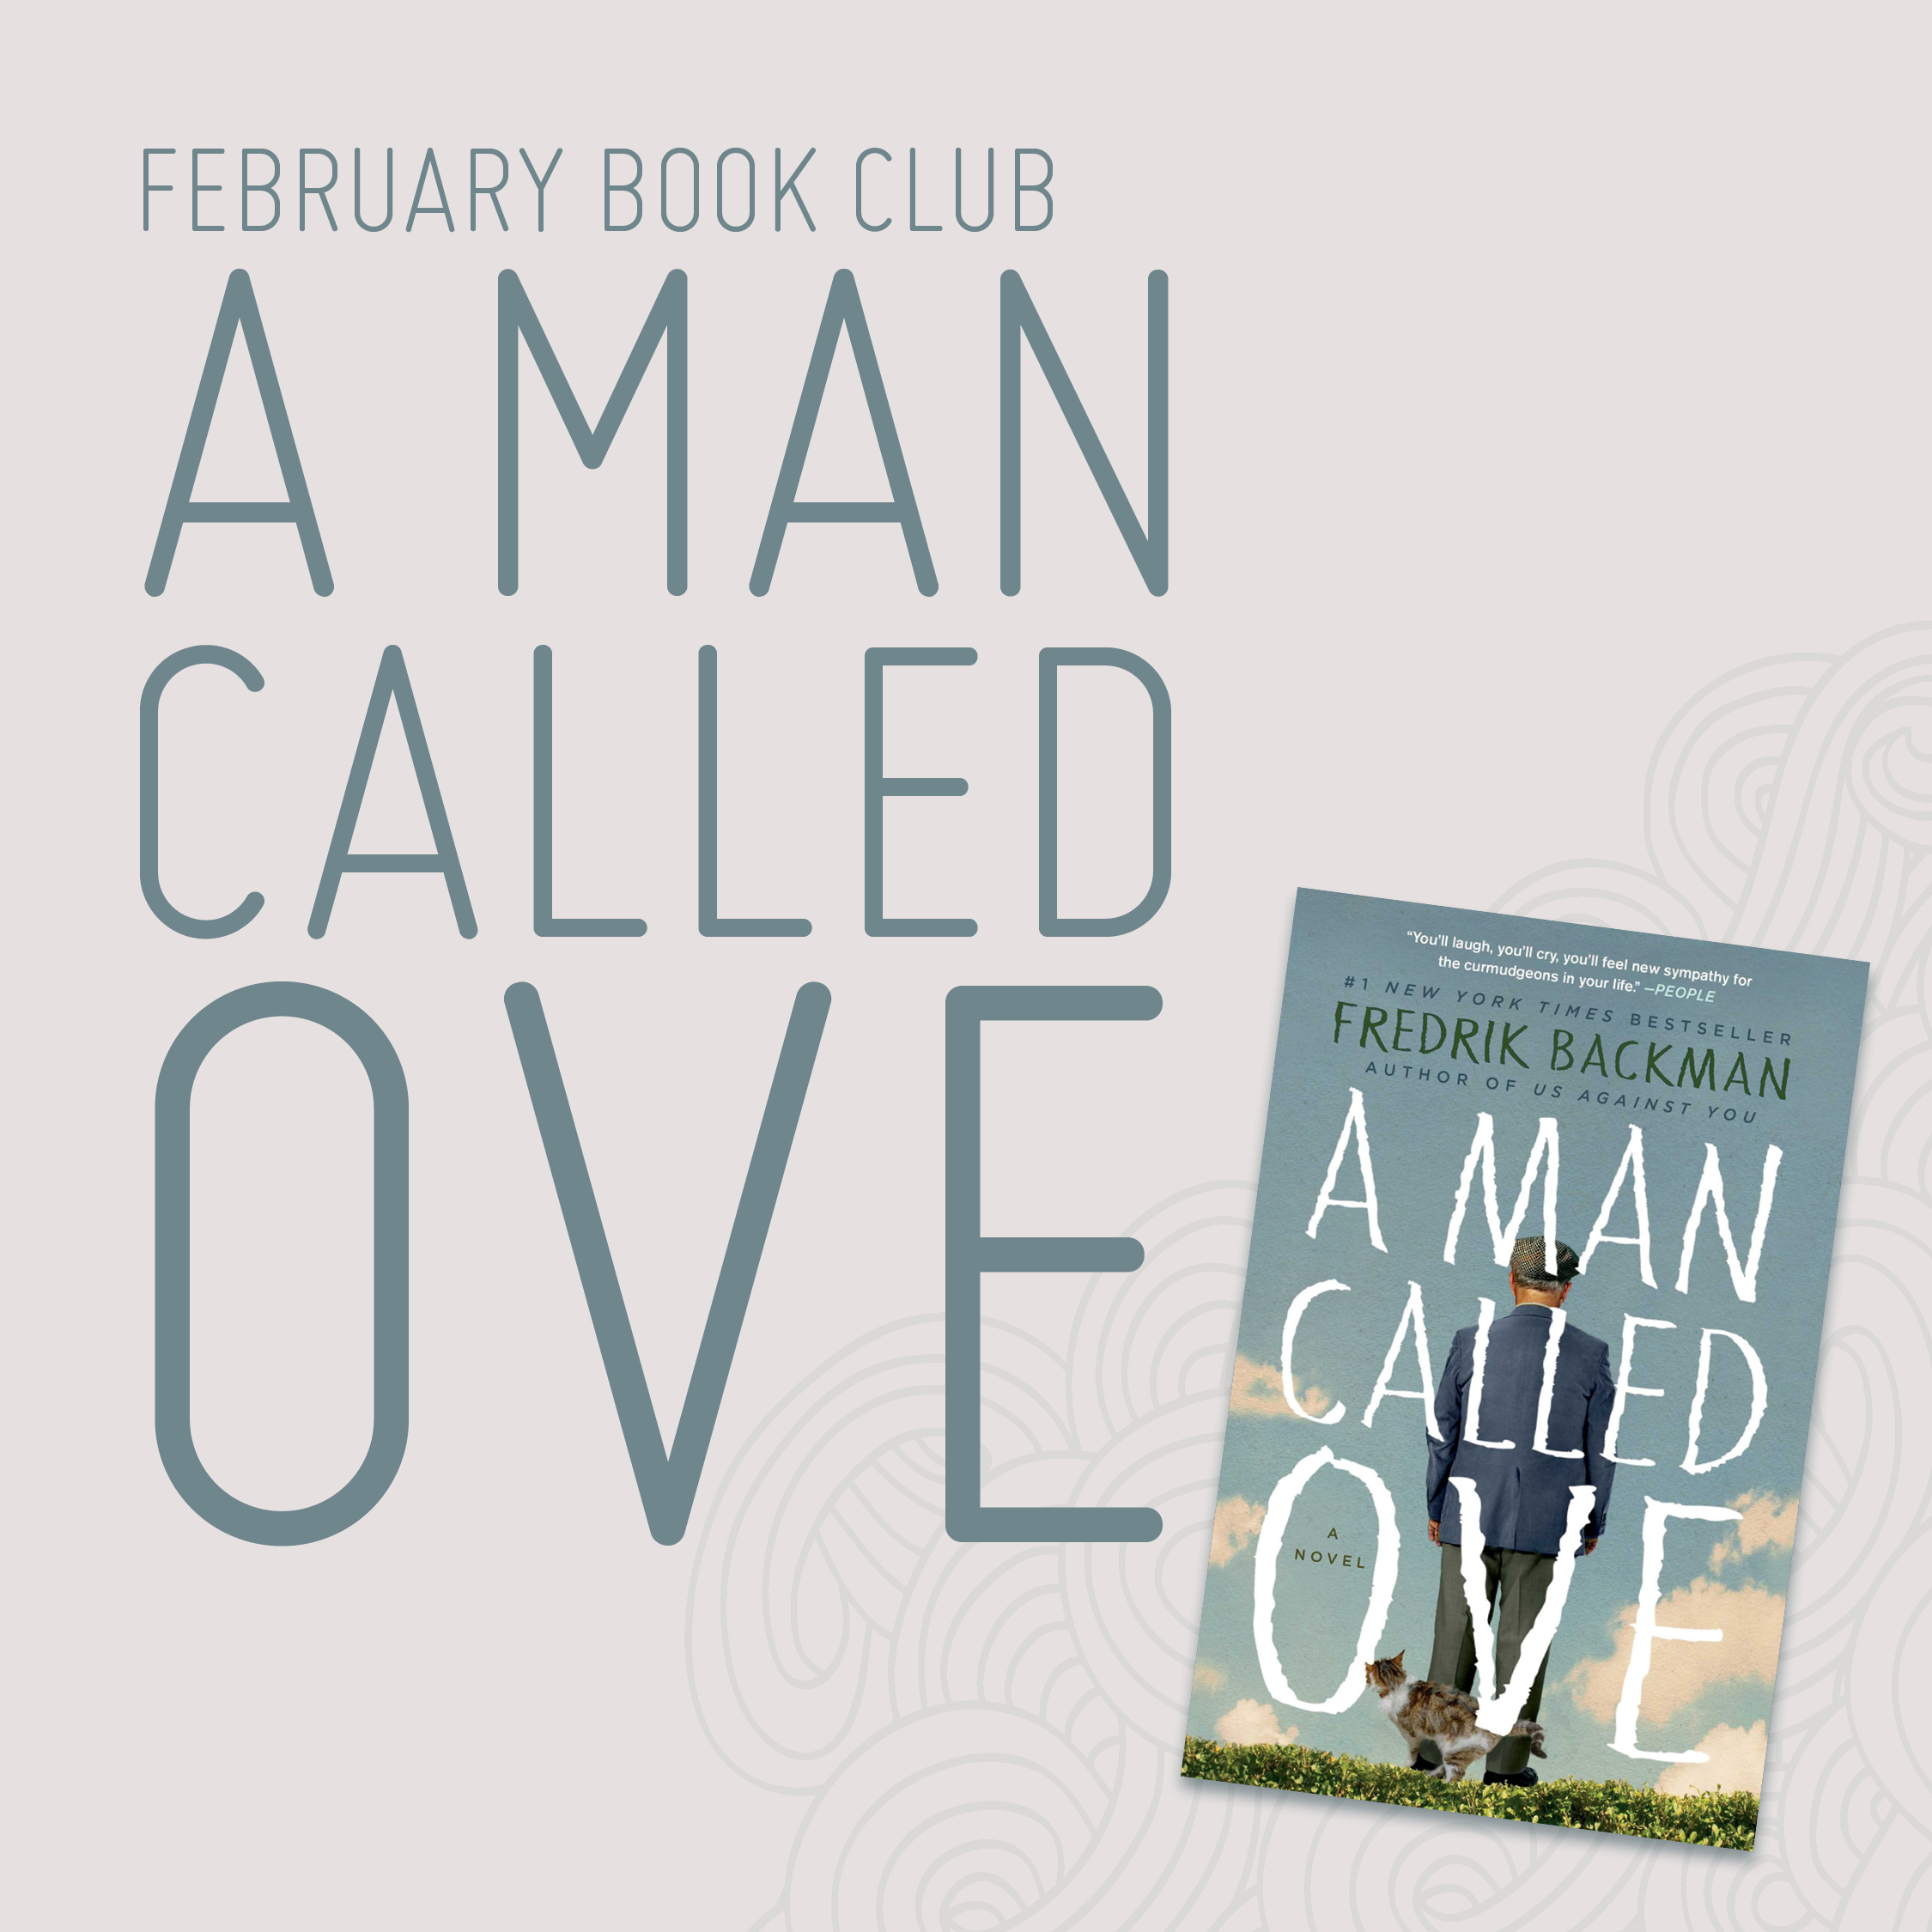 February Book Club - A Man Called Ove by Fredrik Backman